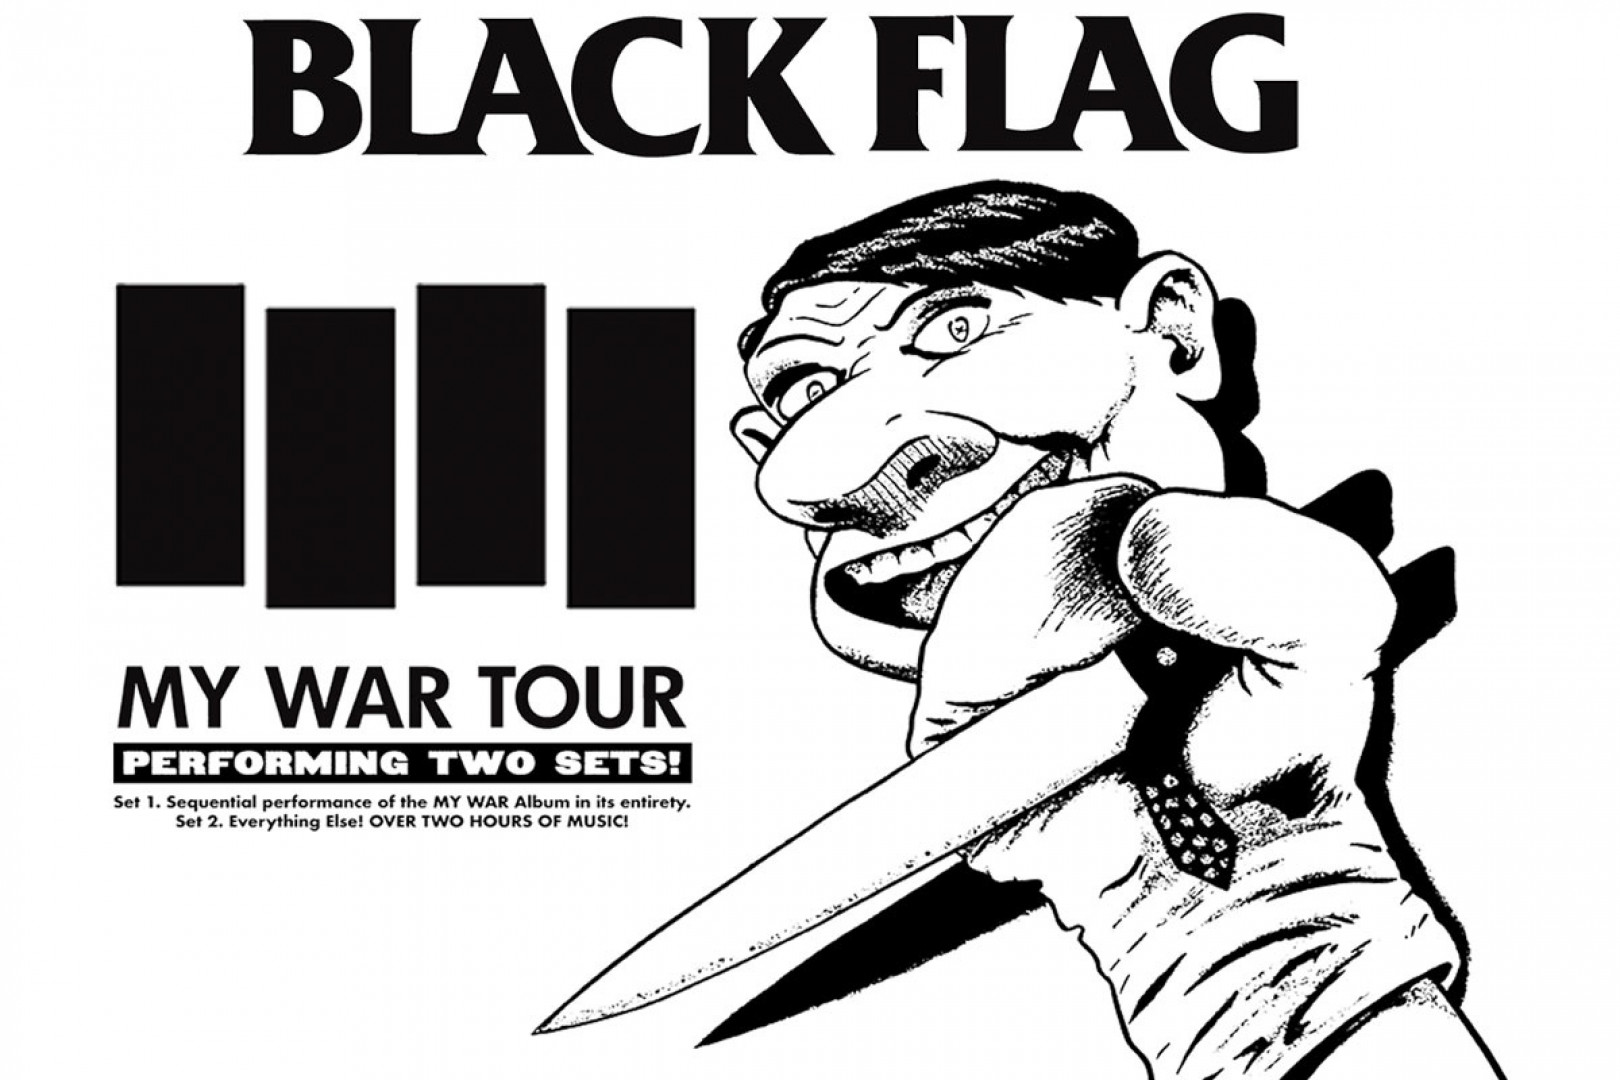 Black Flag announce new leg of My War Tour